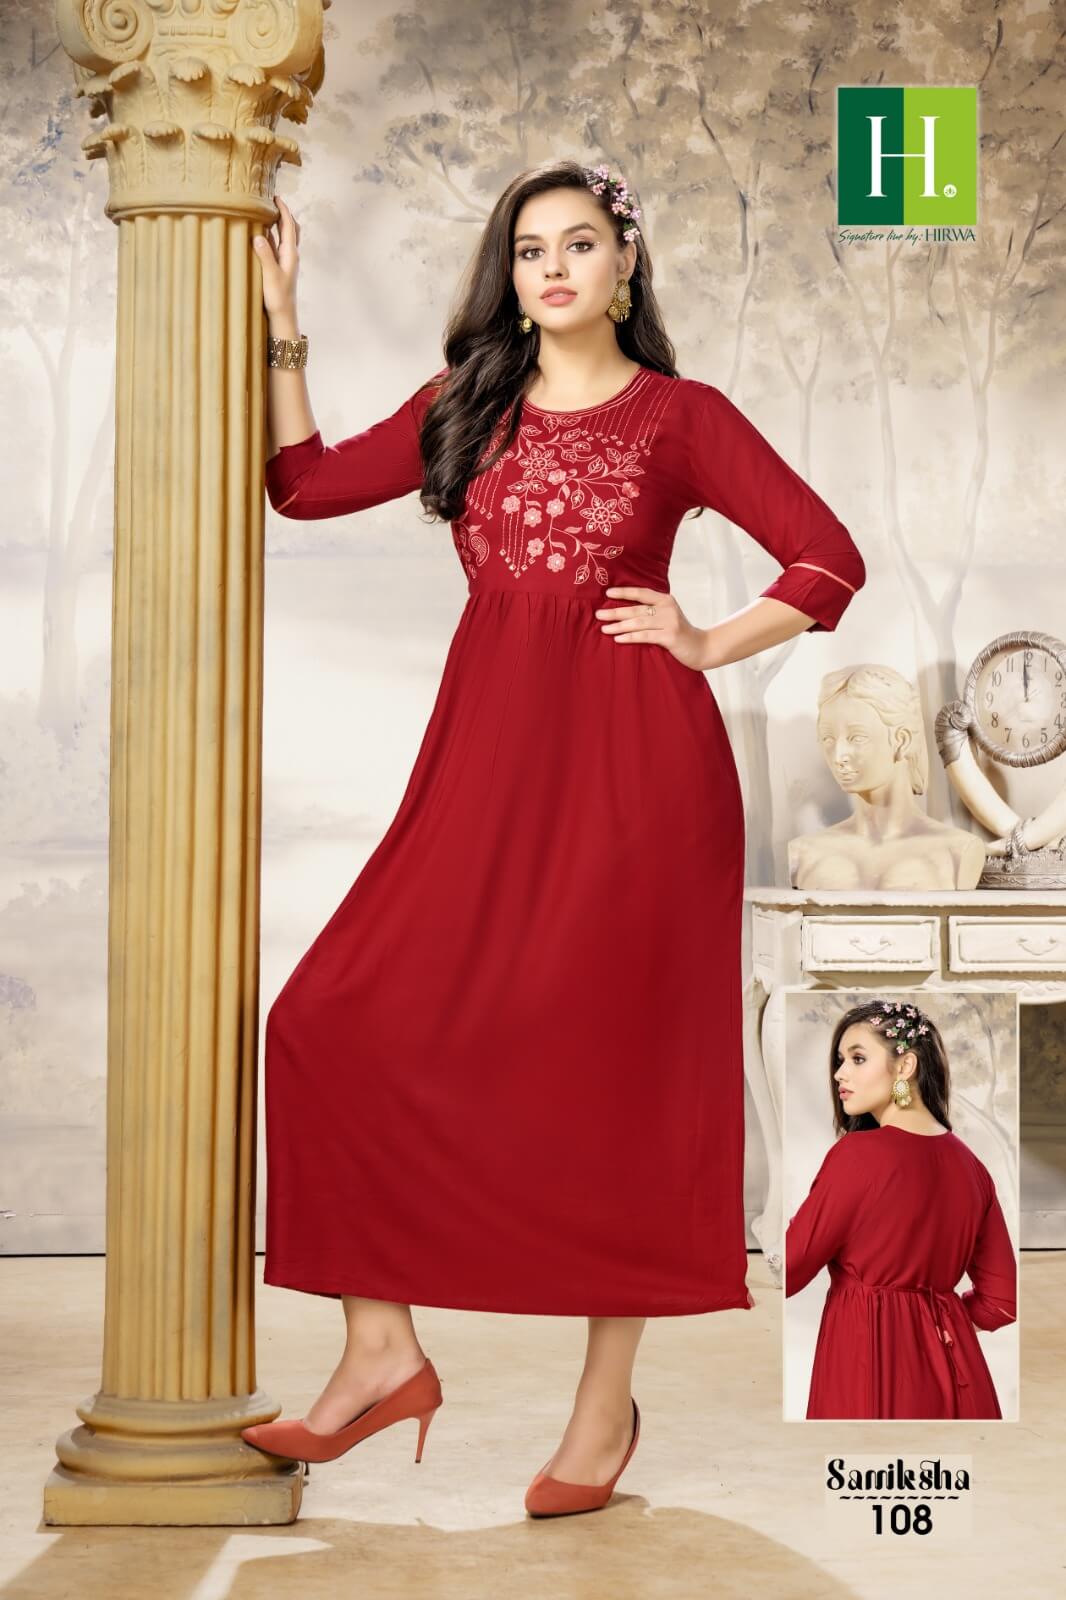 Hirwa Samiksha Gown Style Kurtis Catalog in Wholesale Price, Buy Hirwa Samiksha Gown Style Kurtis Full Catalog in Wholesale Price Online From Aarvee Creation
